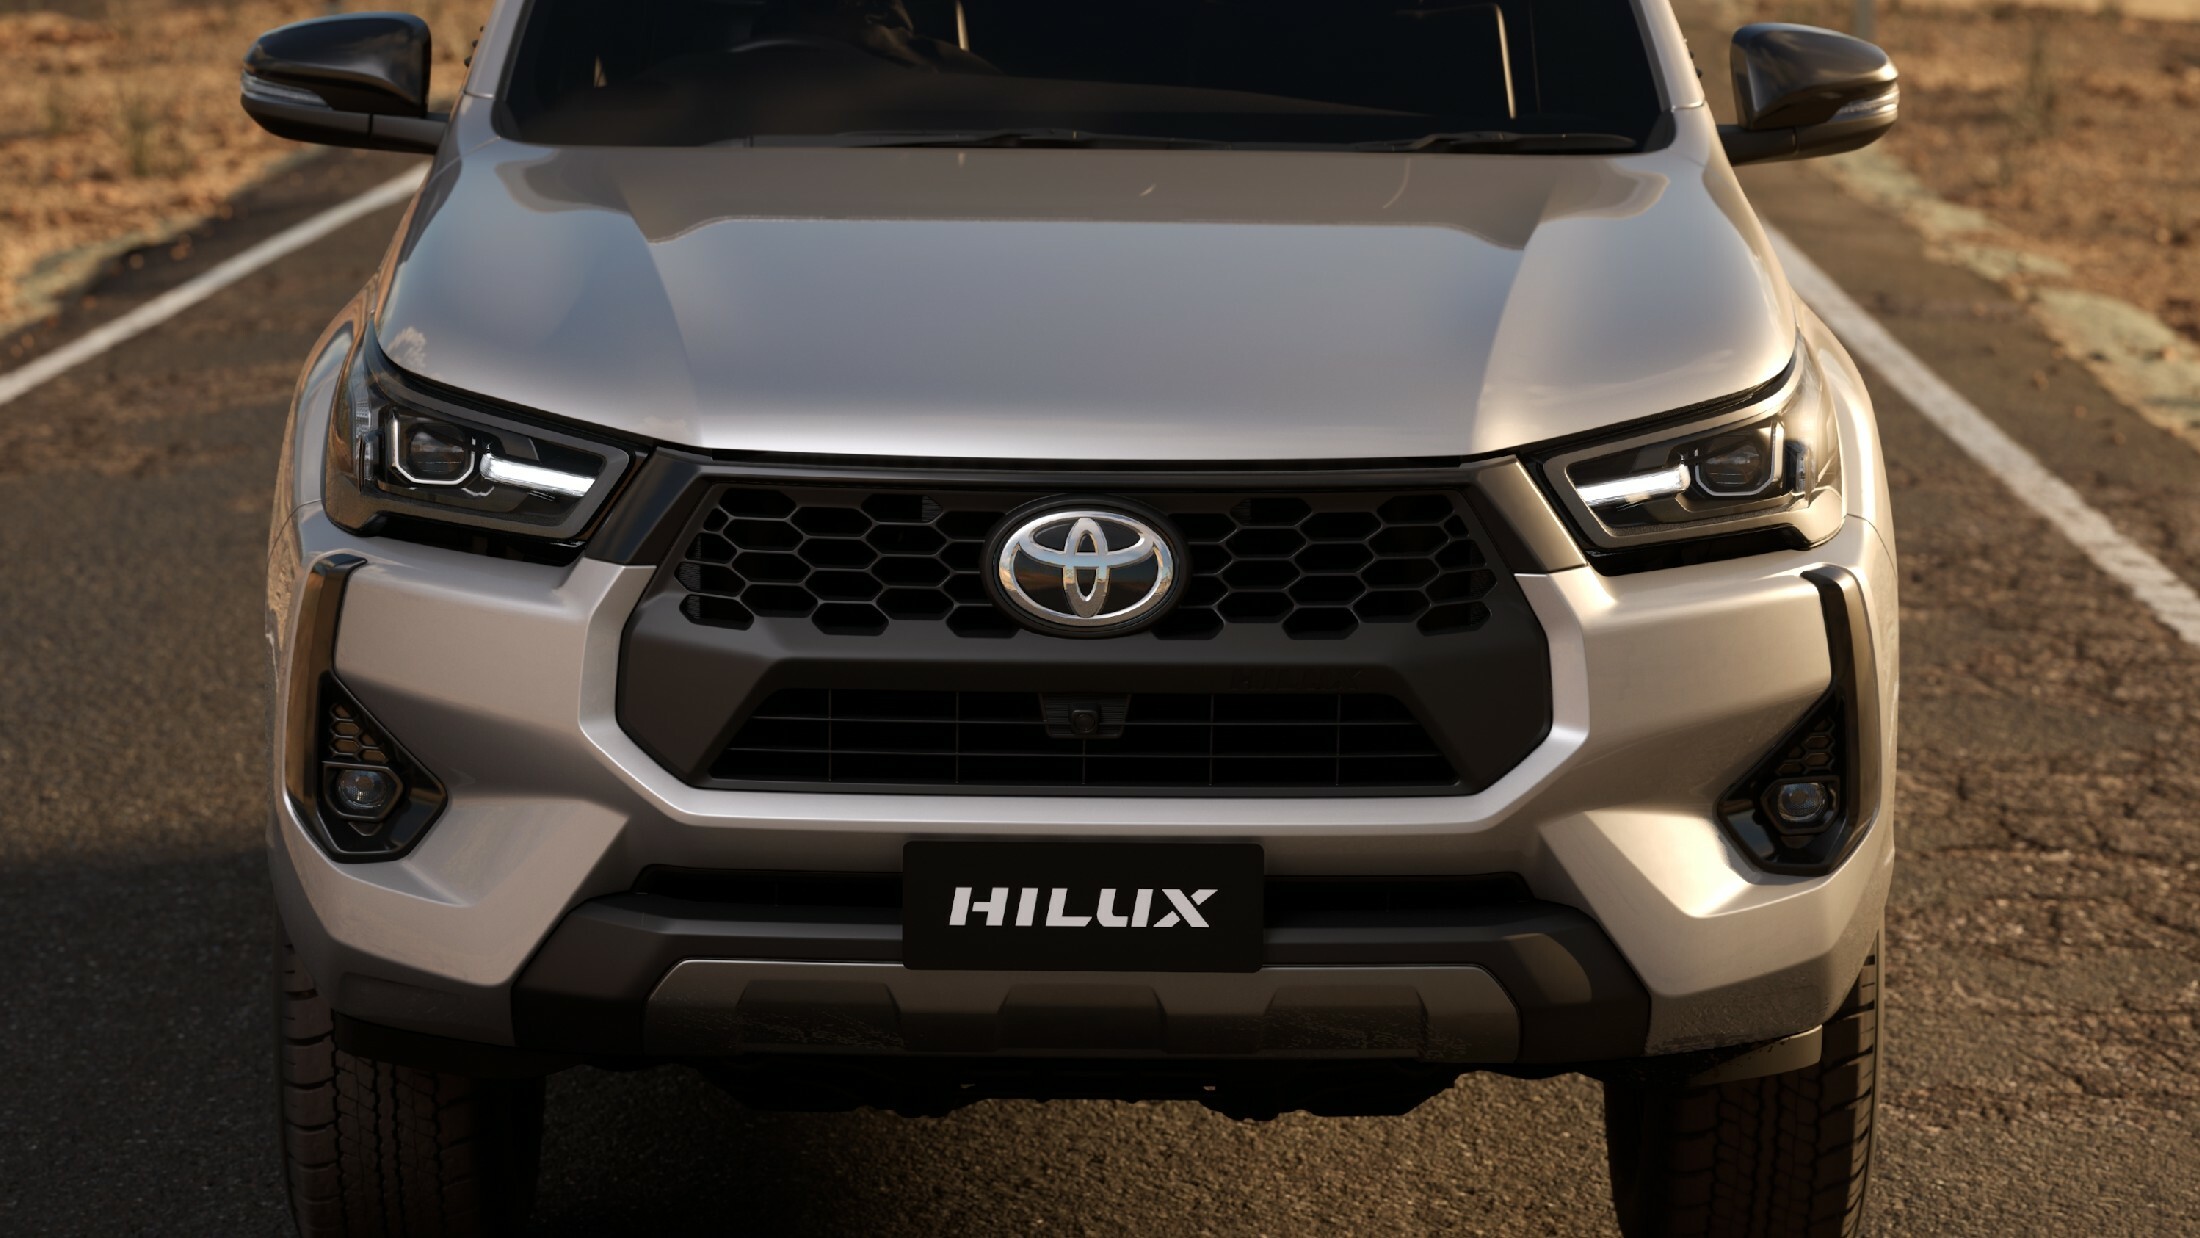 2023 Toyota HiLux GR Sport: 48-volt system not planned, no high